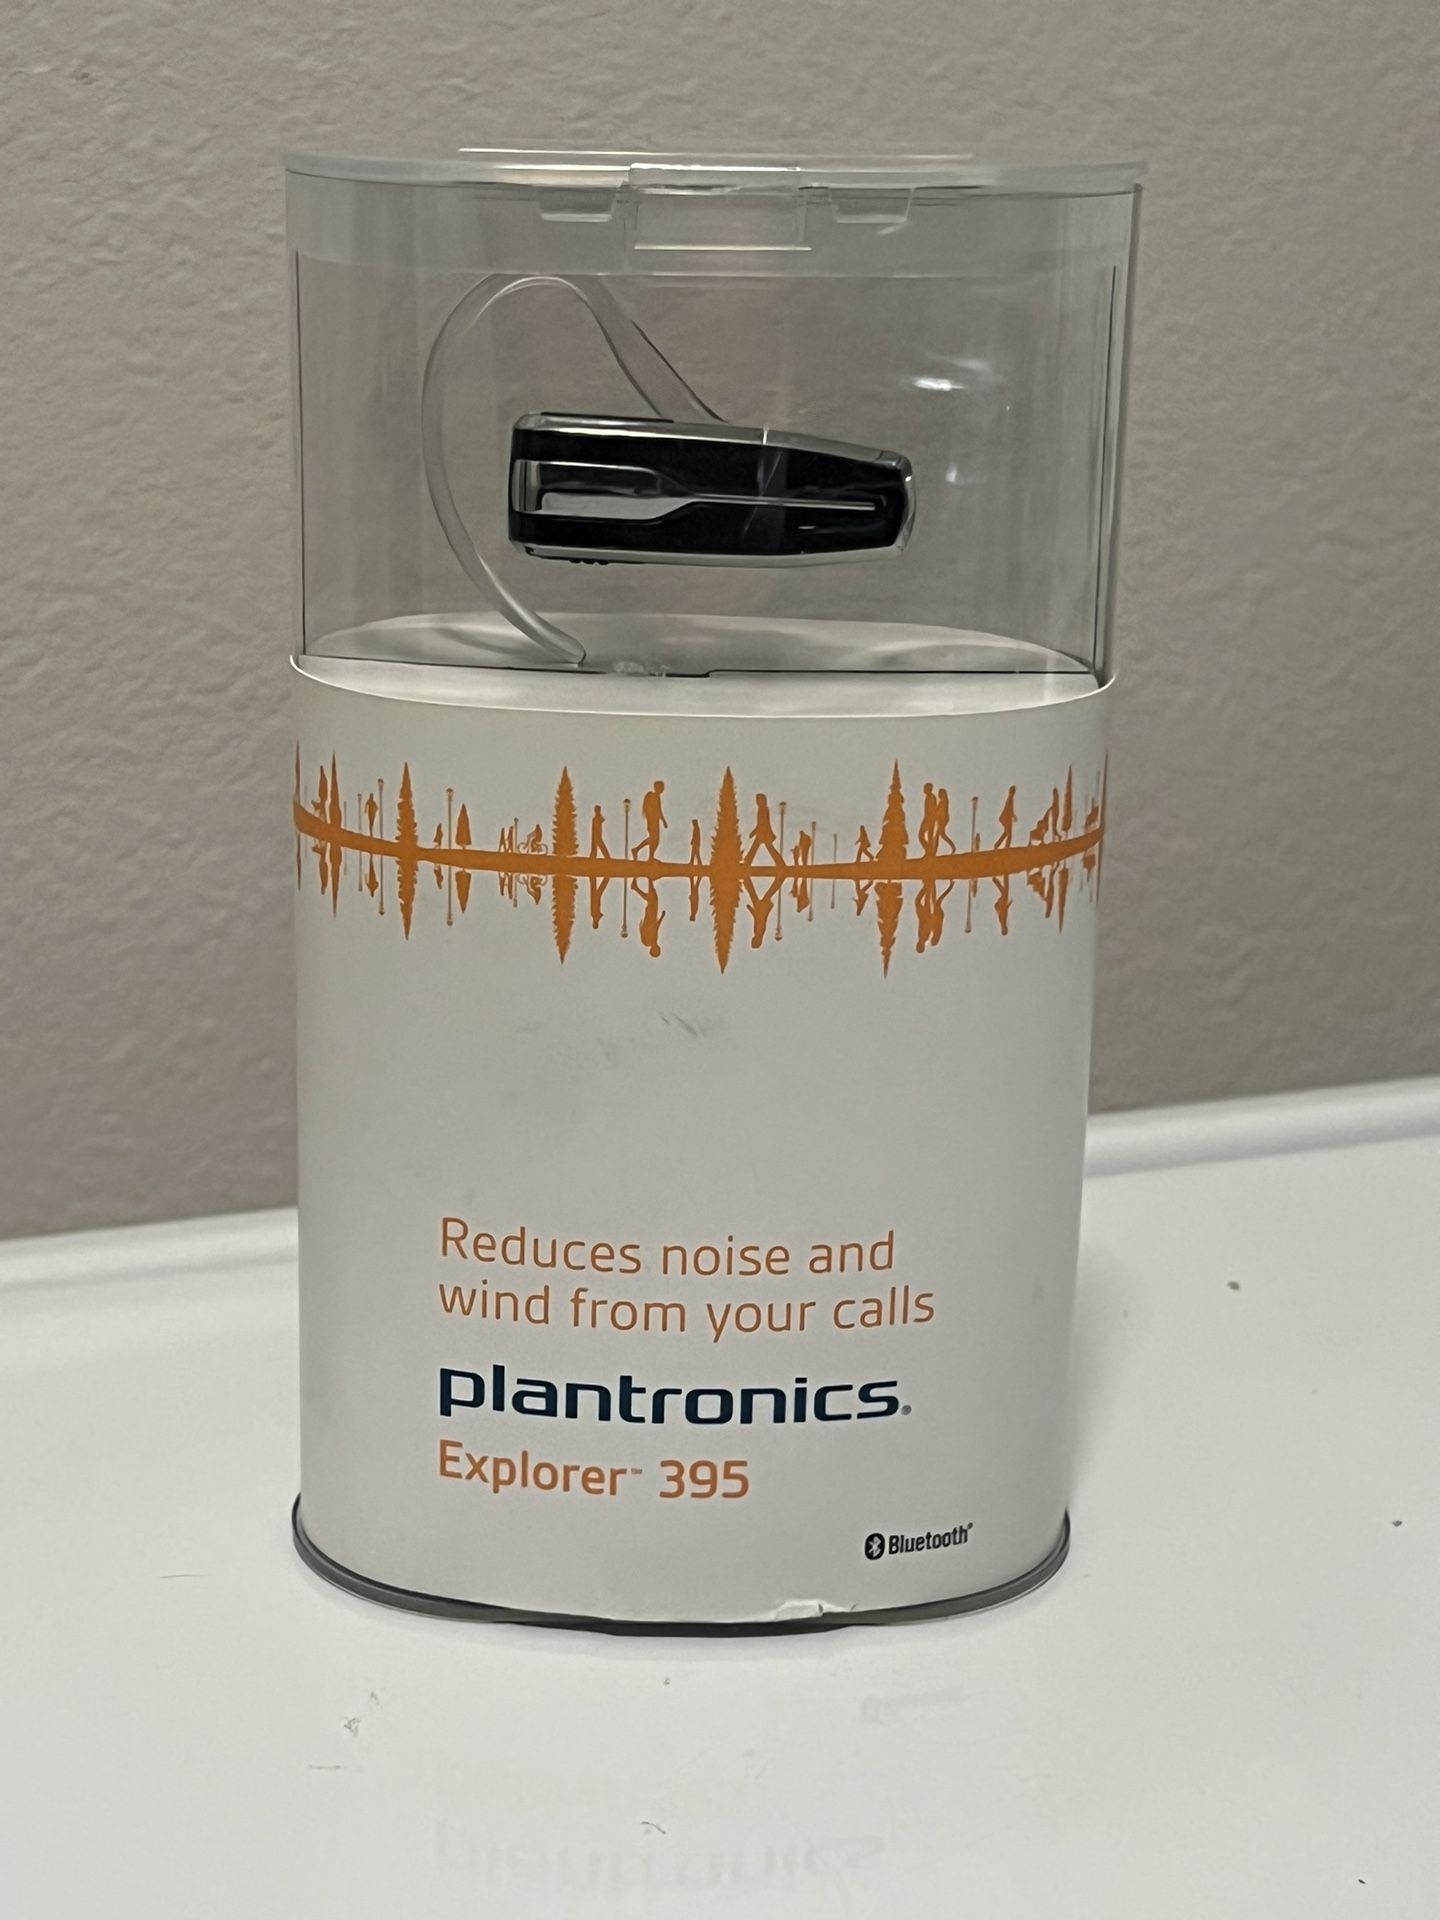 Plantronics Bluetooth Headset 